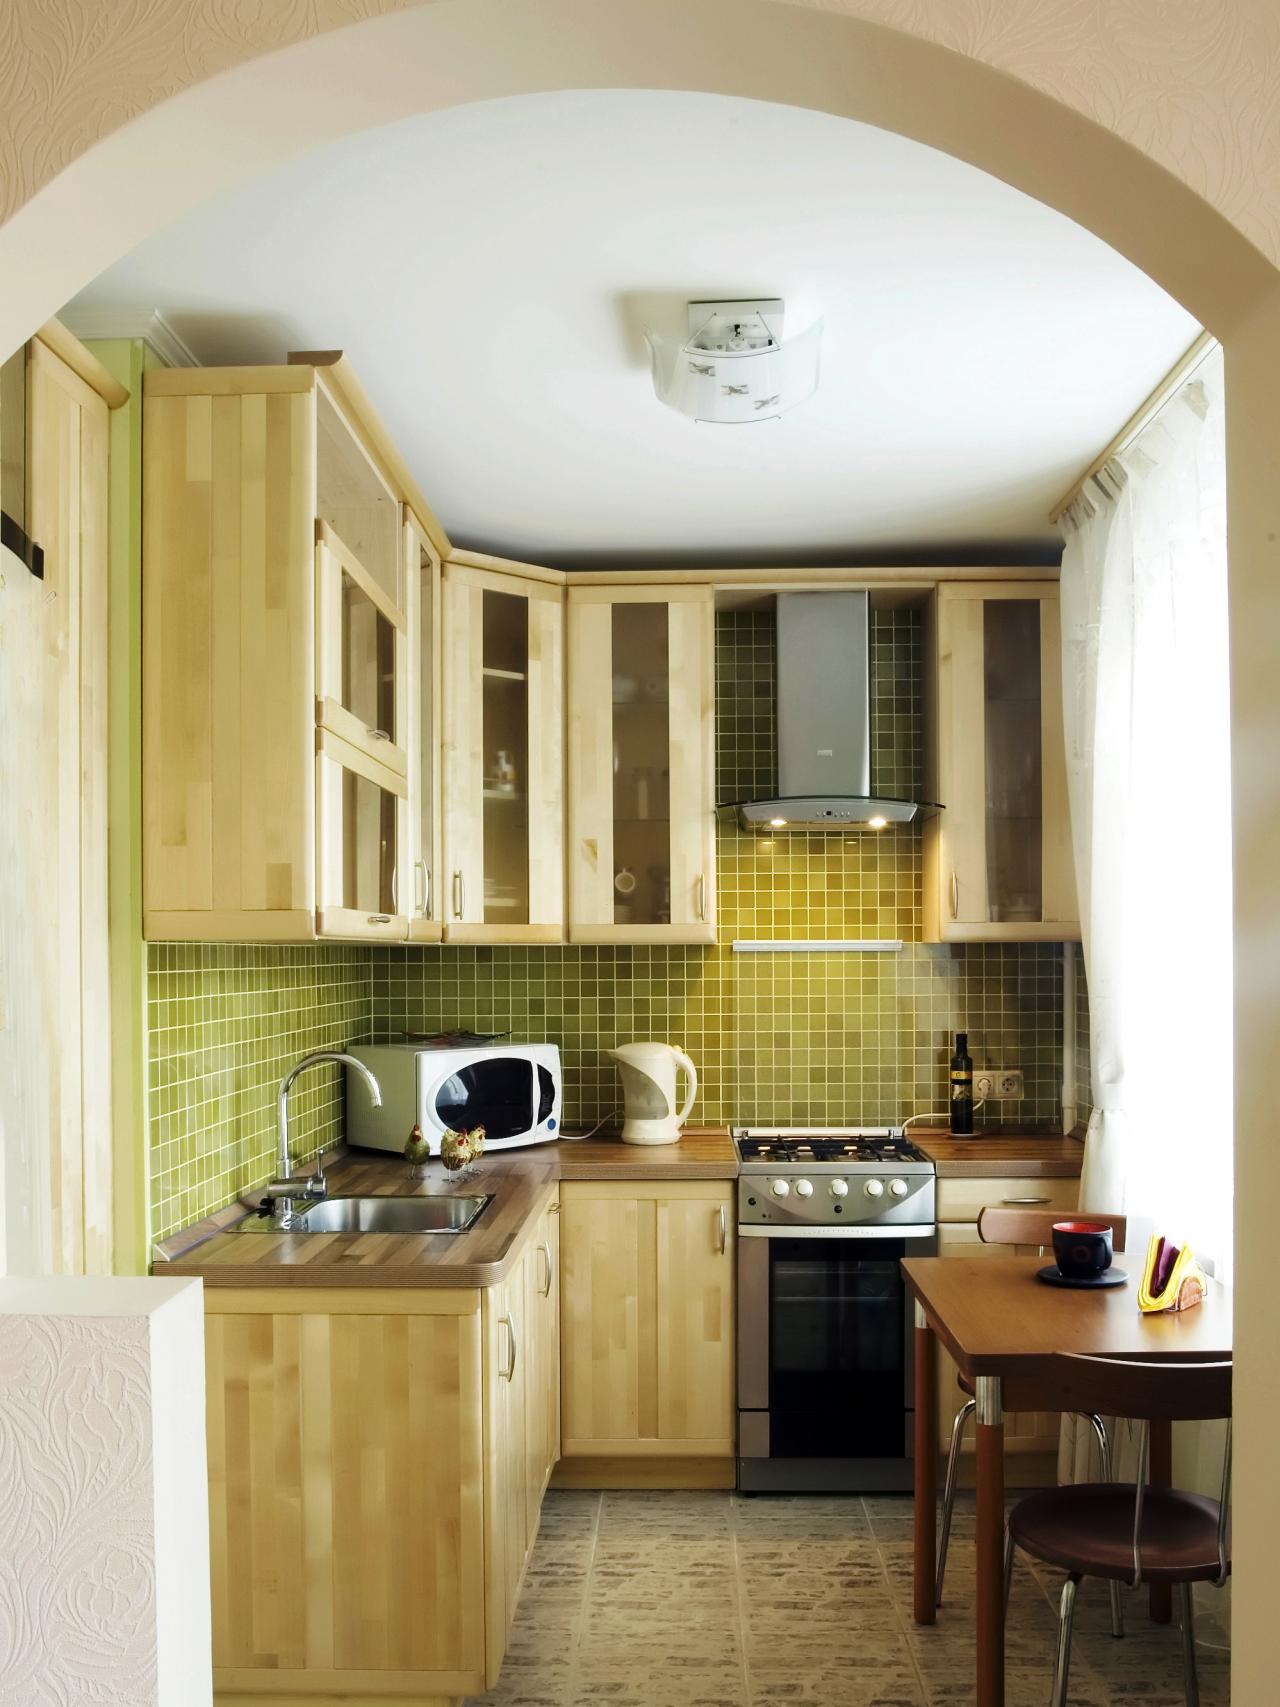 Small Space Kitchen Design Suggestions Hgtv,Interior Design Principles Of Design Rhythm